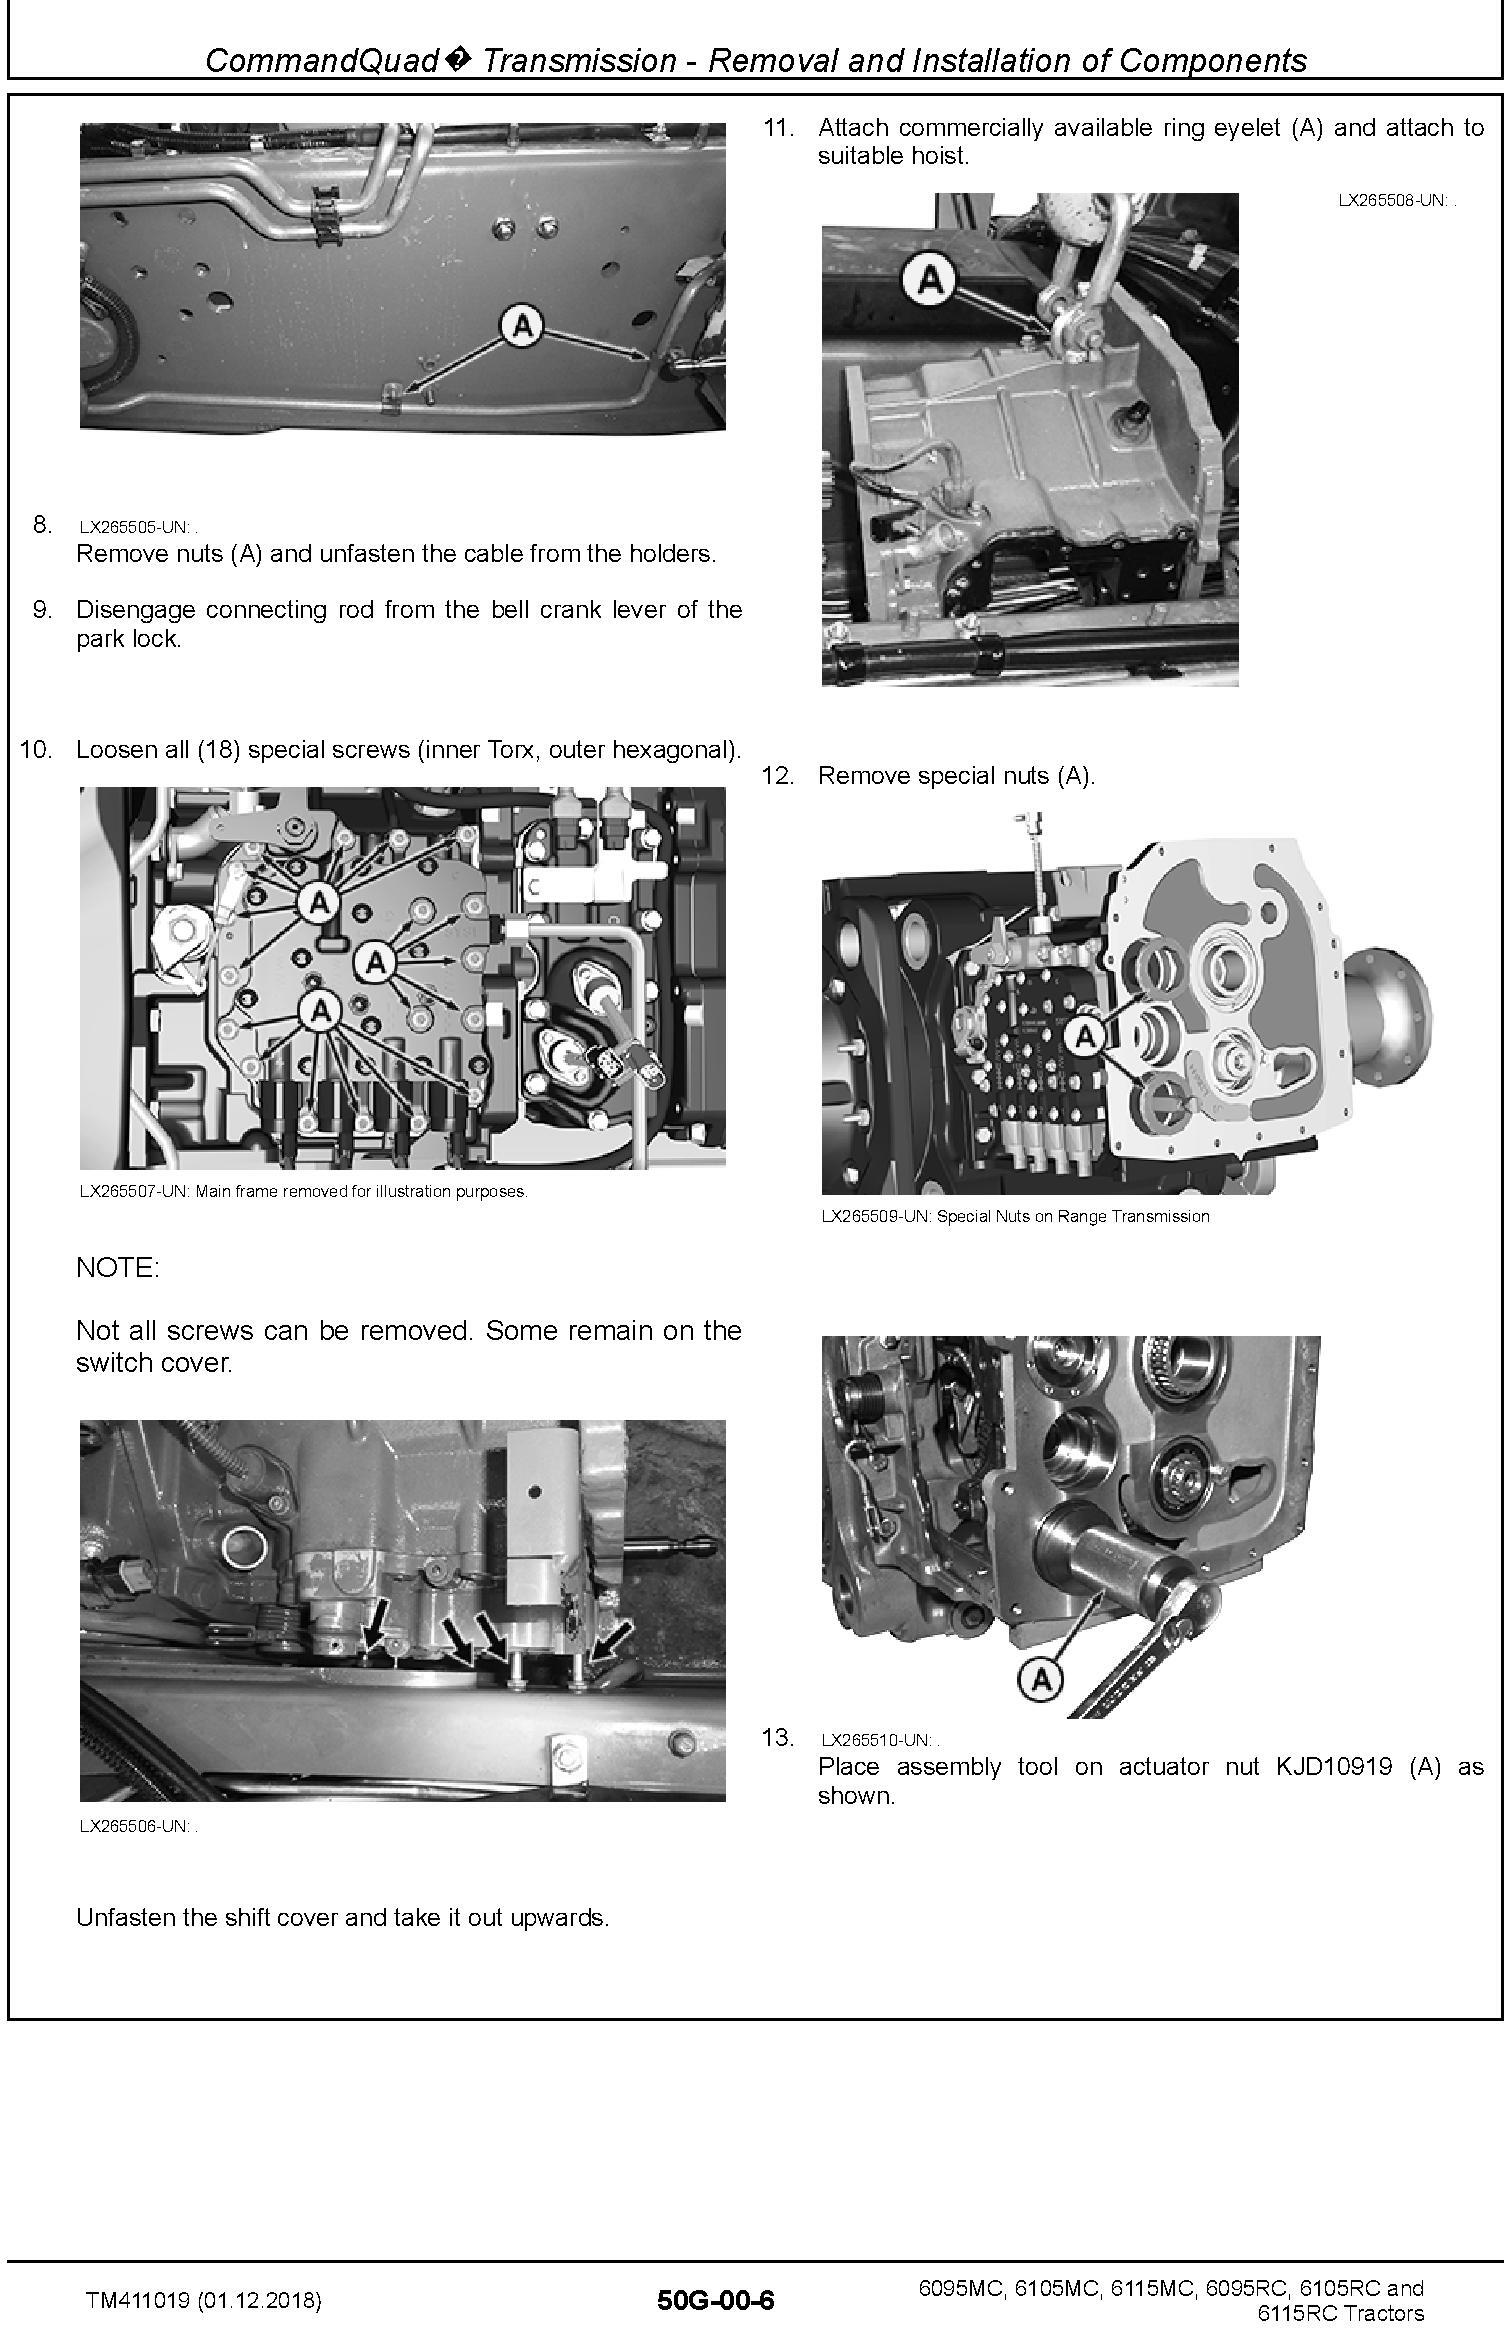 John Deere 6095MC, 6095RC, 6105MC, 6105RC, 6115MC, 6115RC Tractor Repair Technical Manual (TM411019) - 2